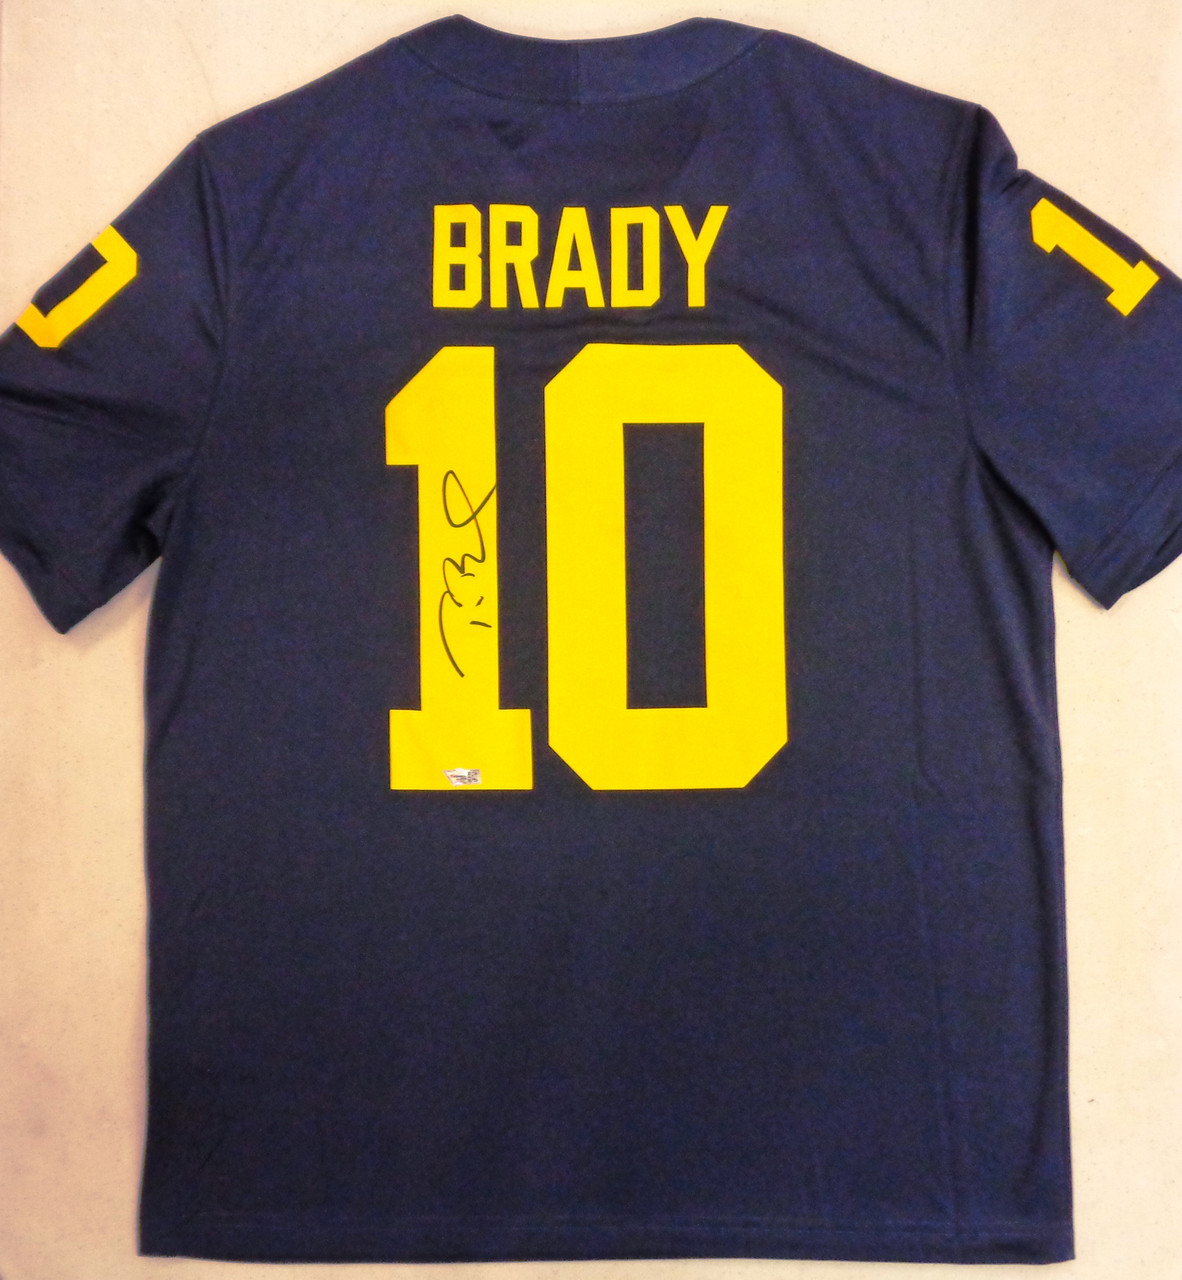 Tom Brady Autographed University of Michigan Jumpman Jersey